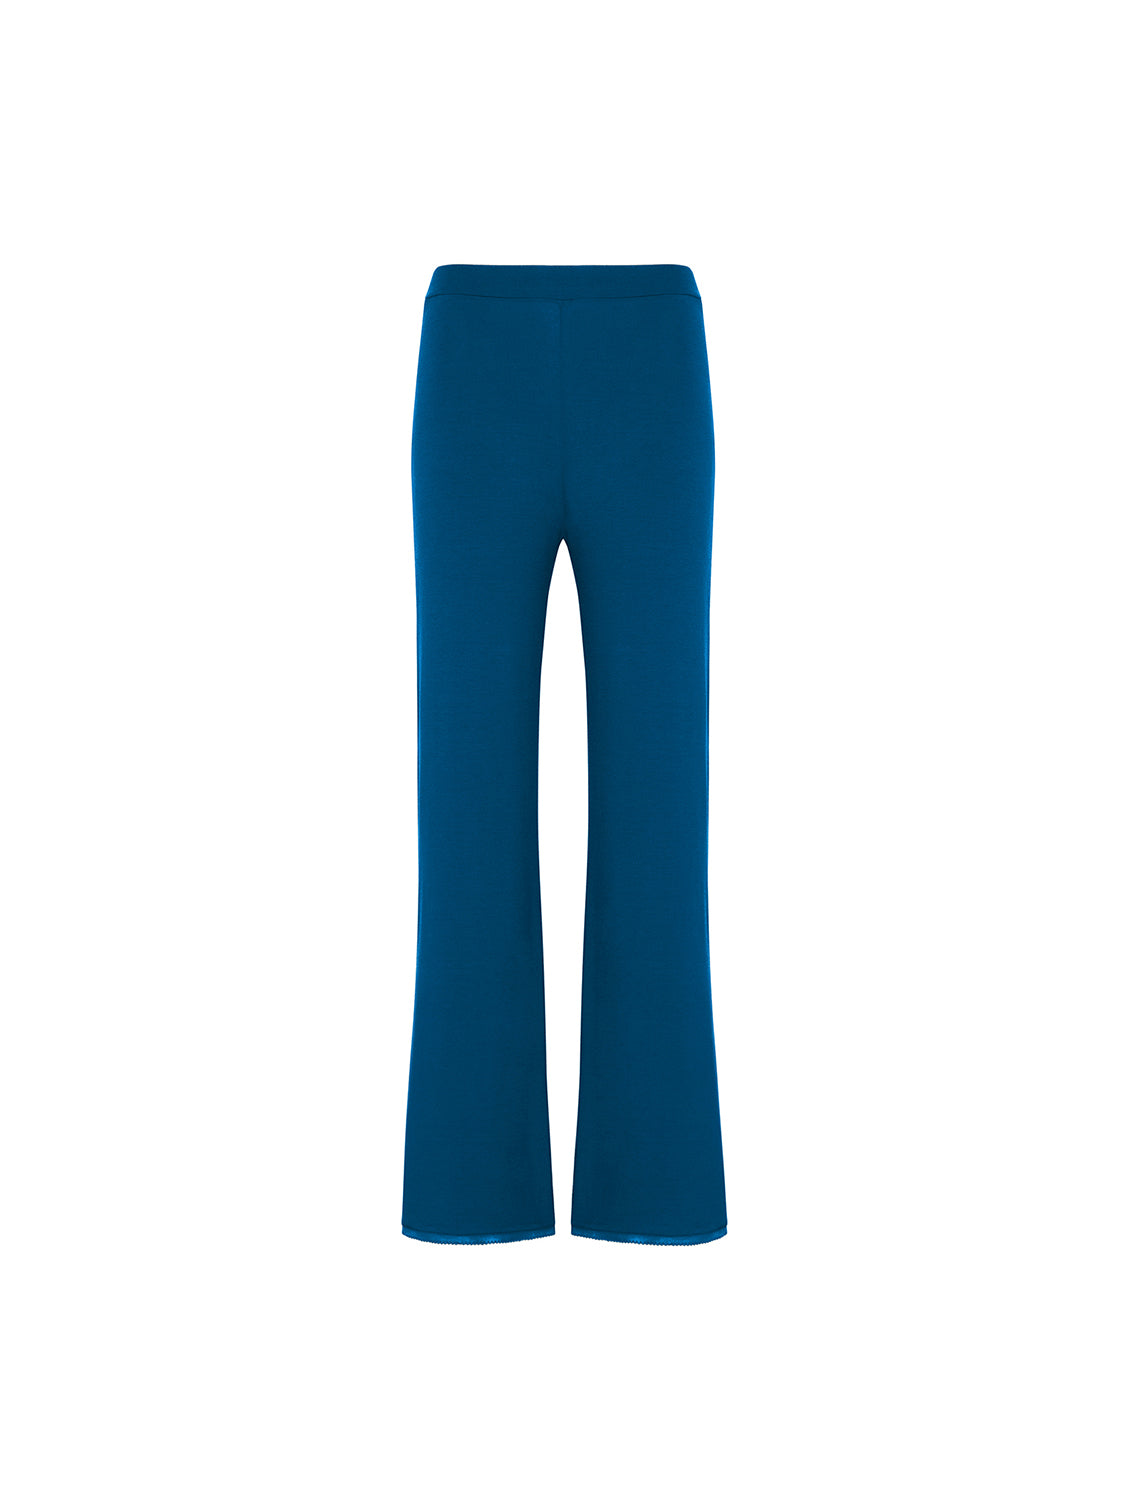 pantalon-bleu-poseidon-aurore-21